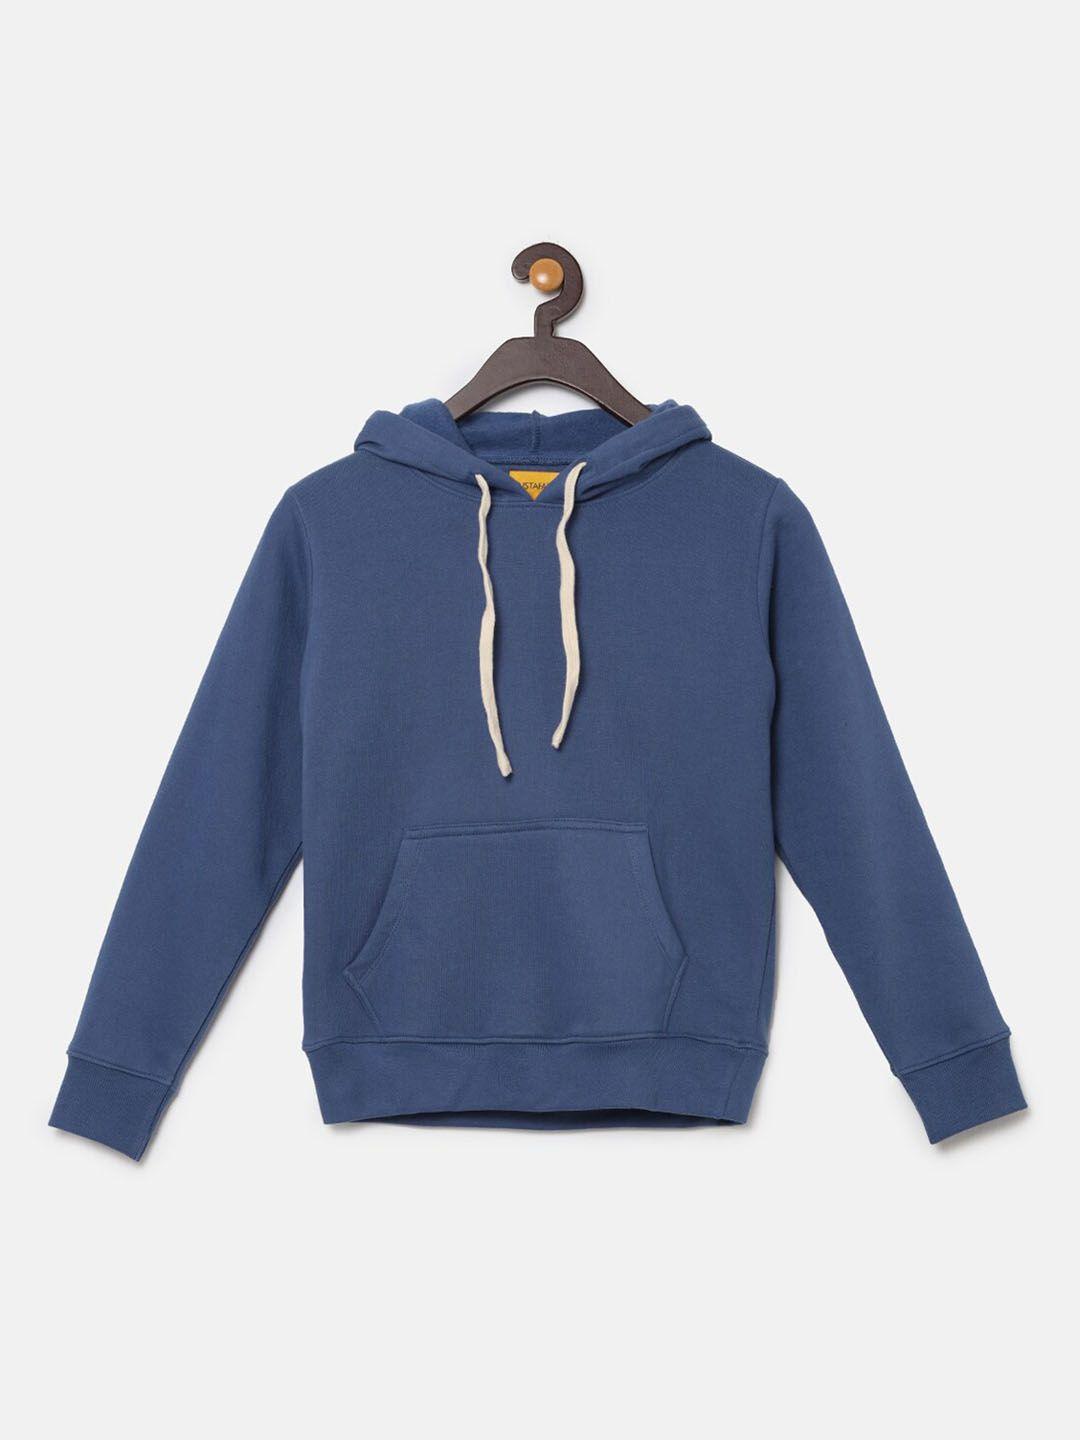 instafab-boys-blue-pure-cotton-solid-hooded-pullover-sweatshirt